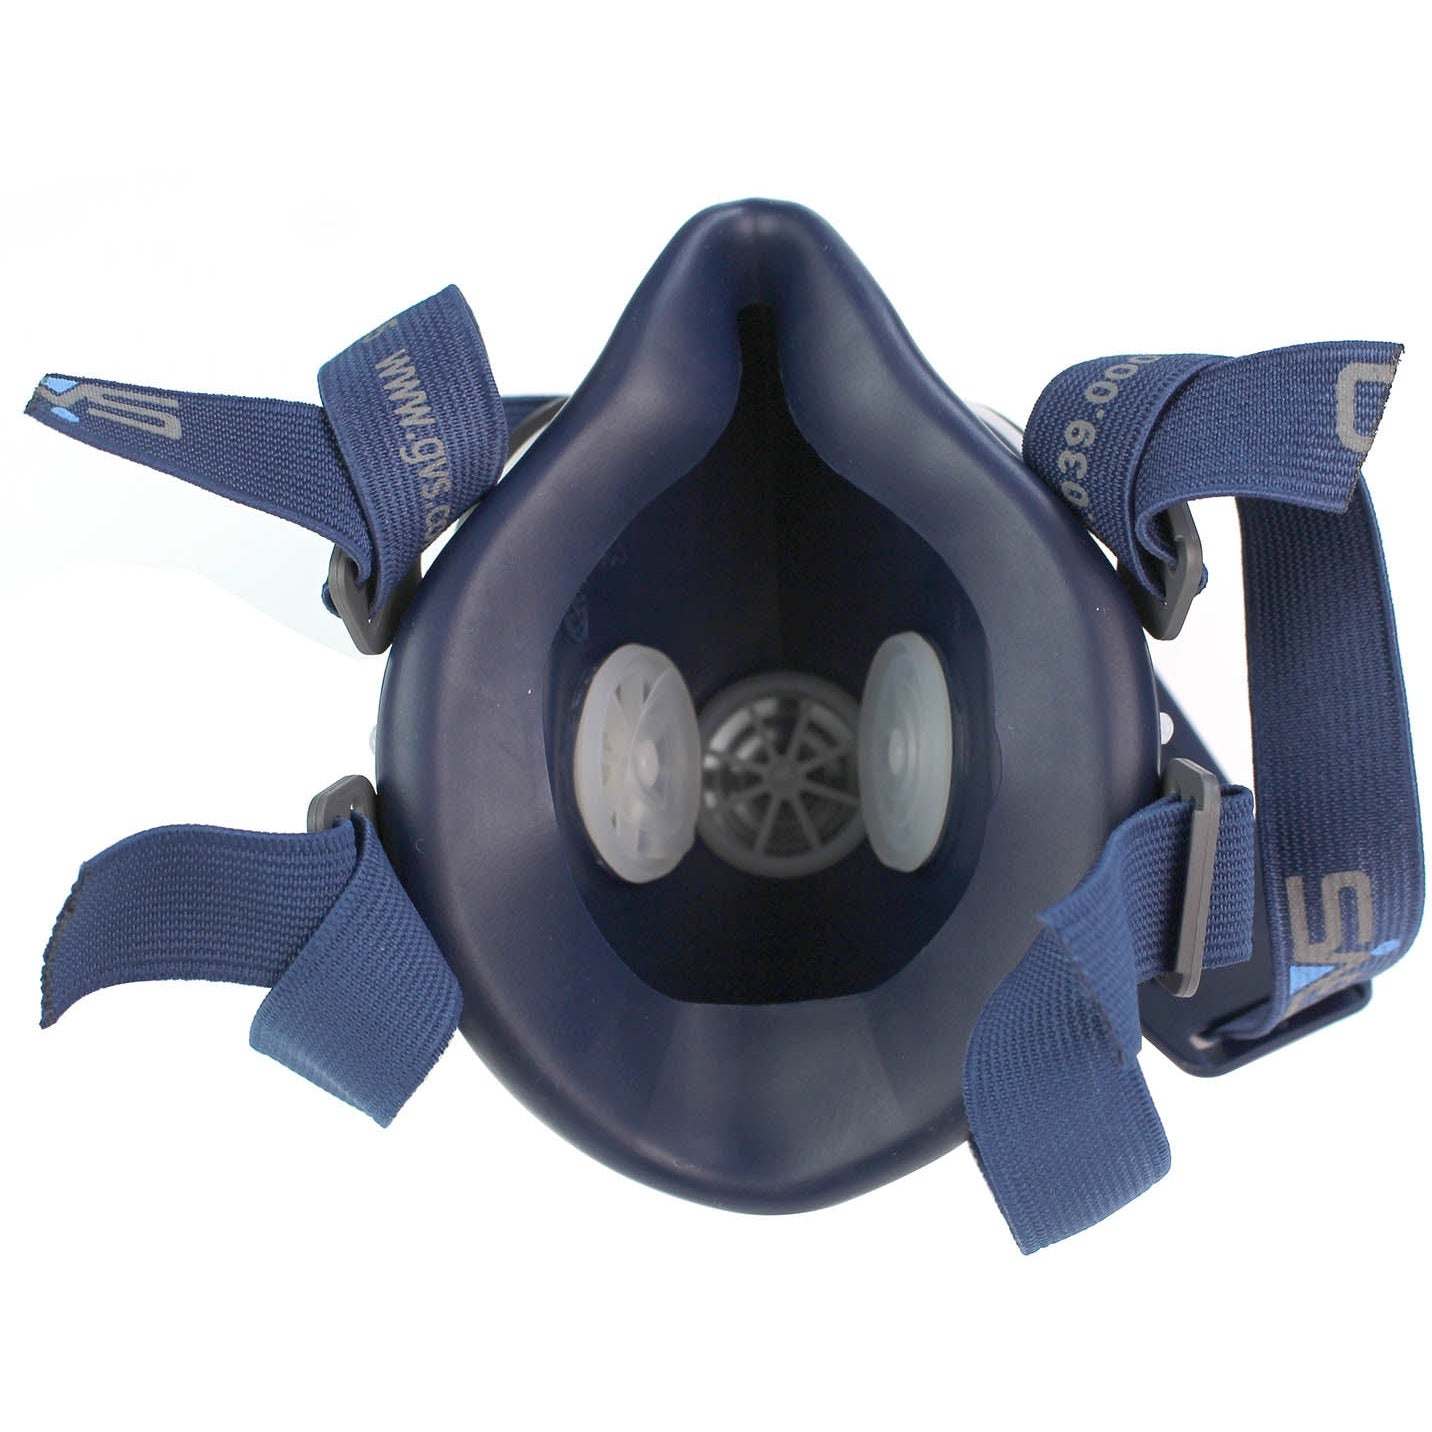 GVS Elipse P3 Half Mask Respirator x 1 (Medium-Large)